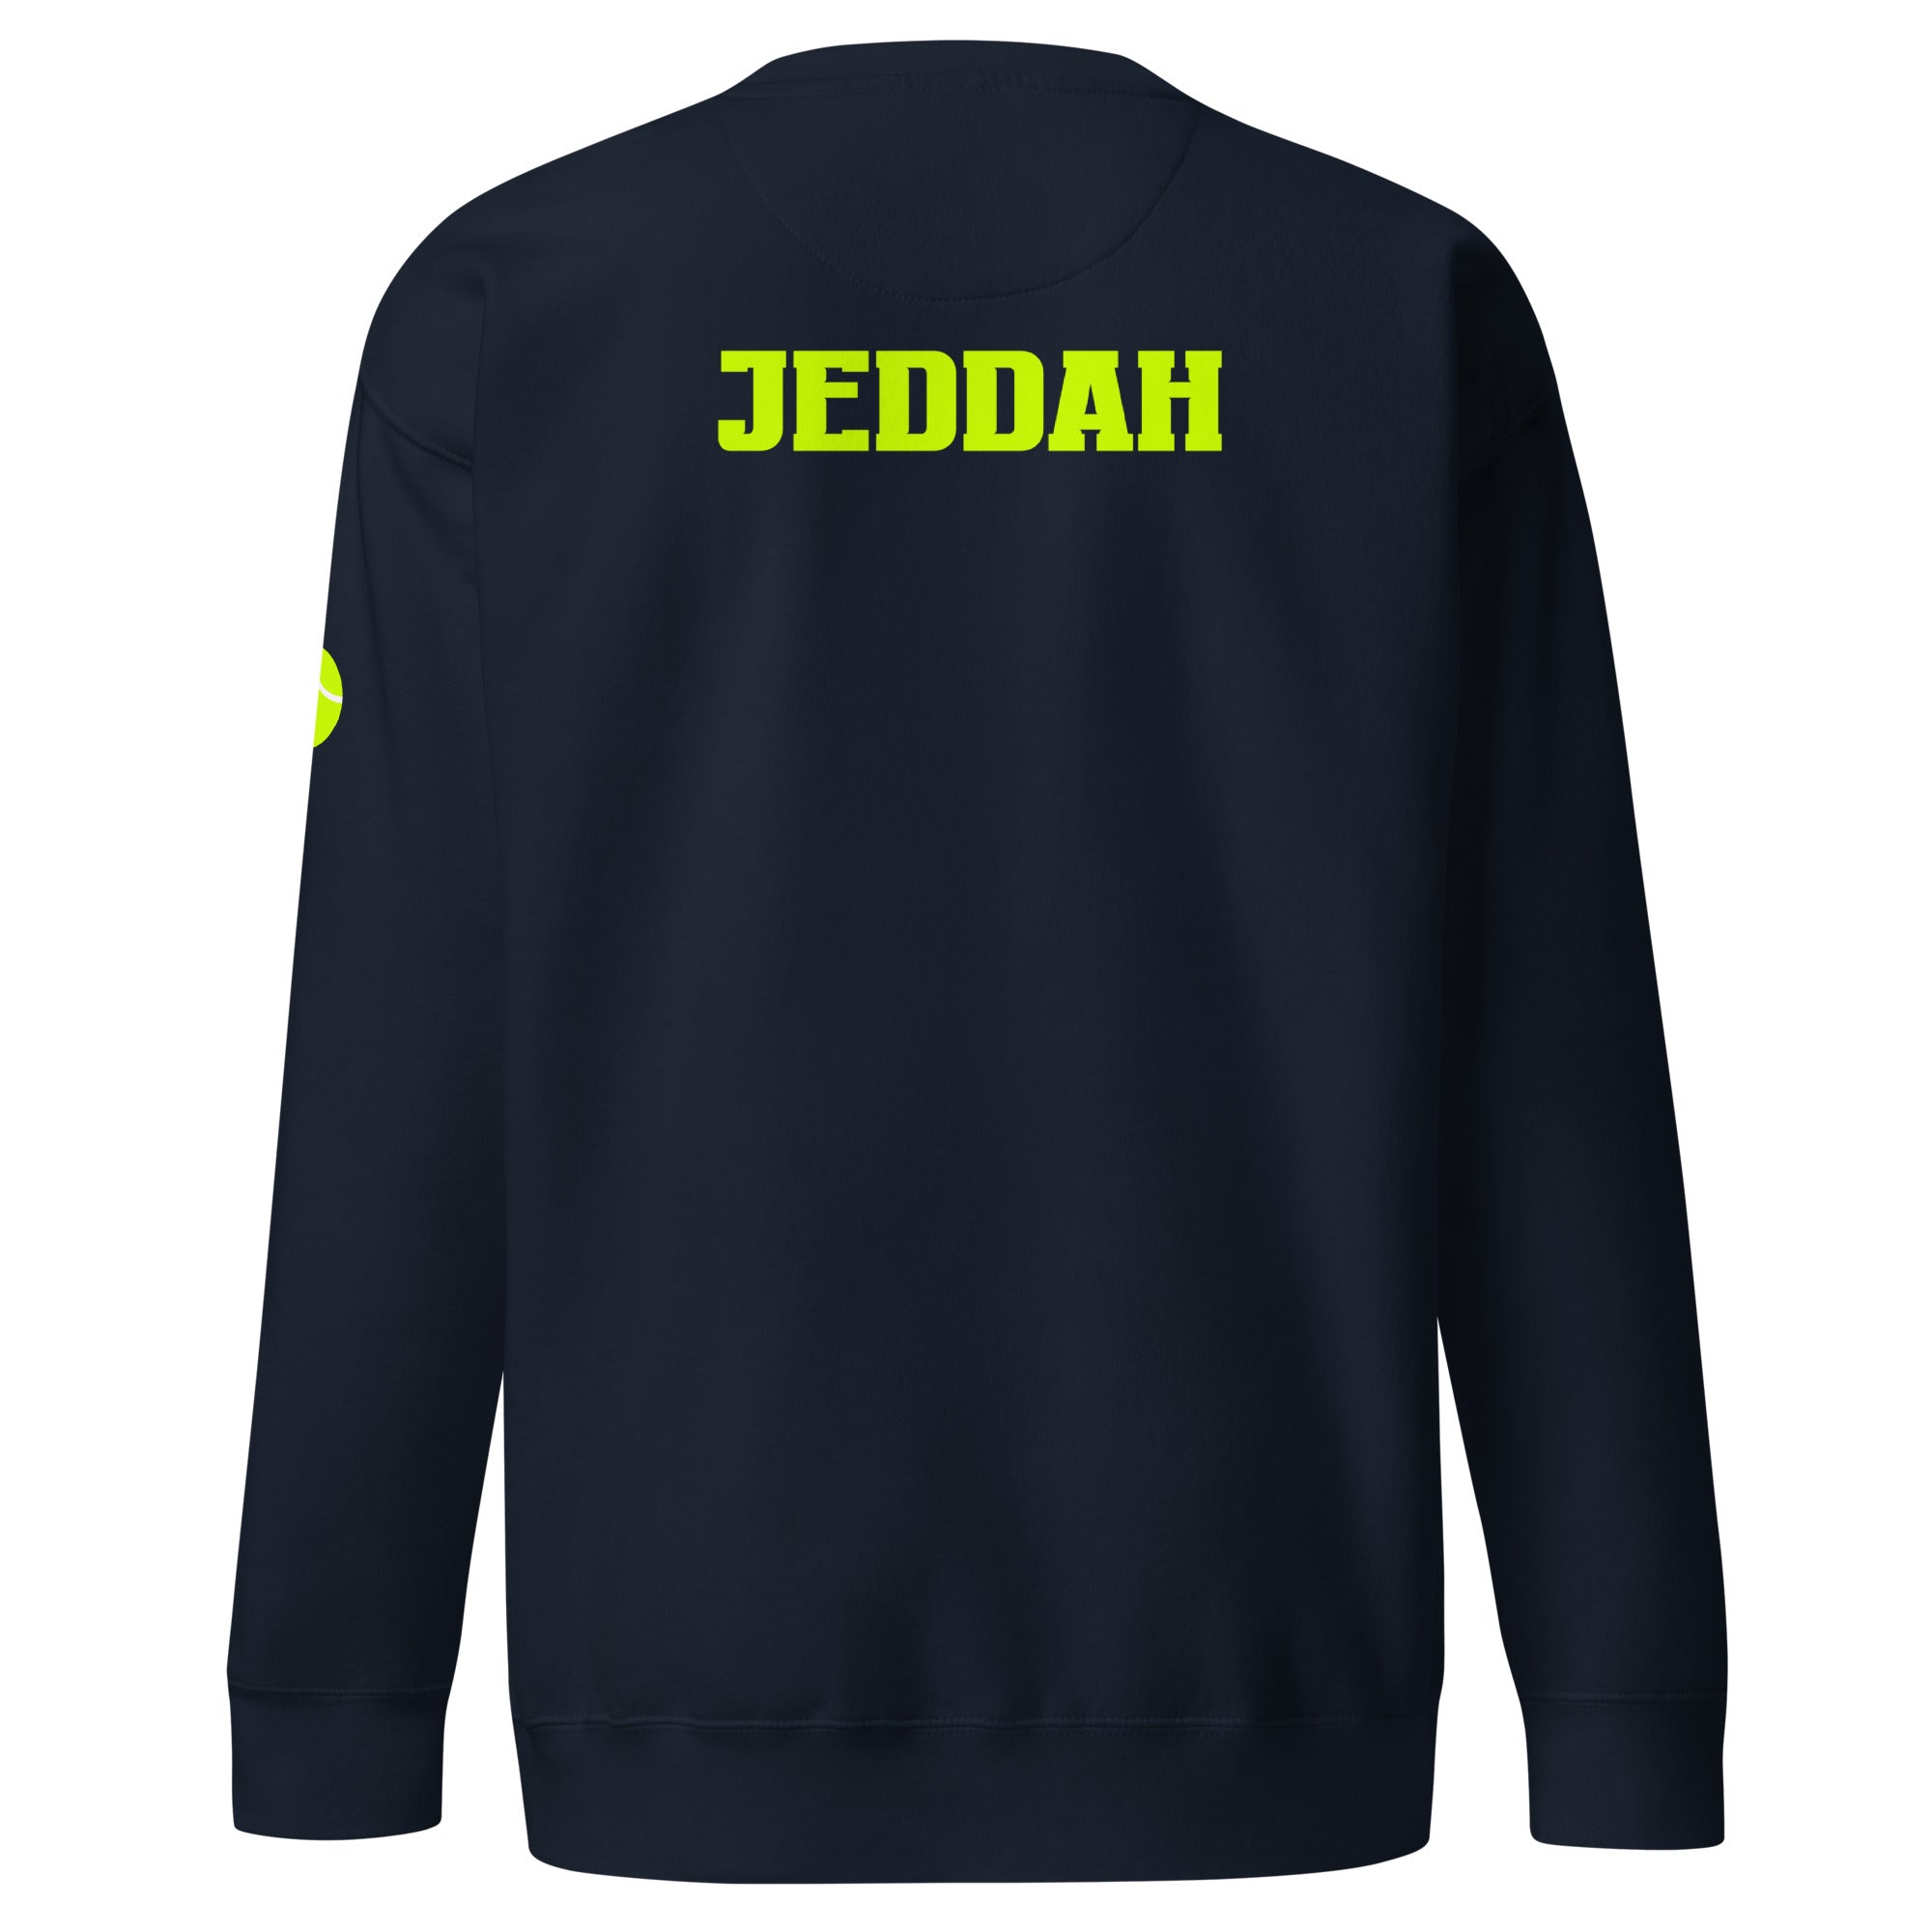 Unisex Premium Sweatshirt - Tennis Masters Jeddah - GRAPHIC T-SHIRTS